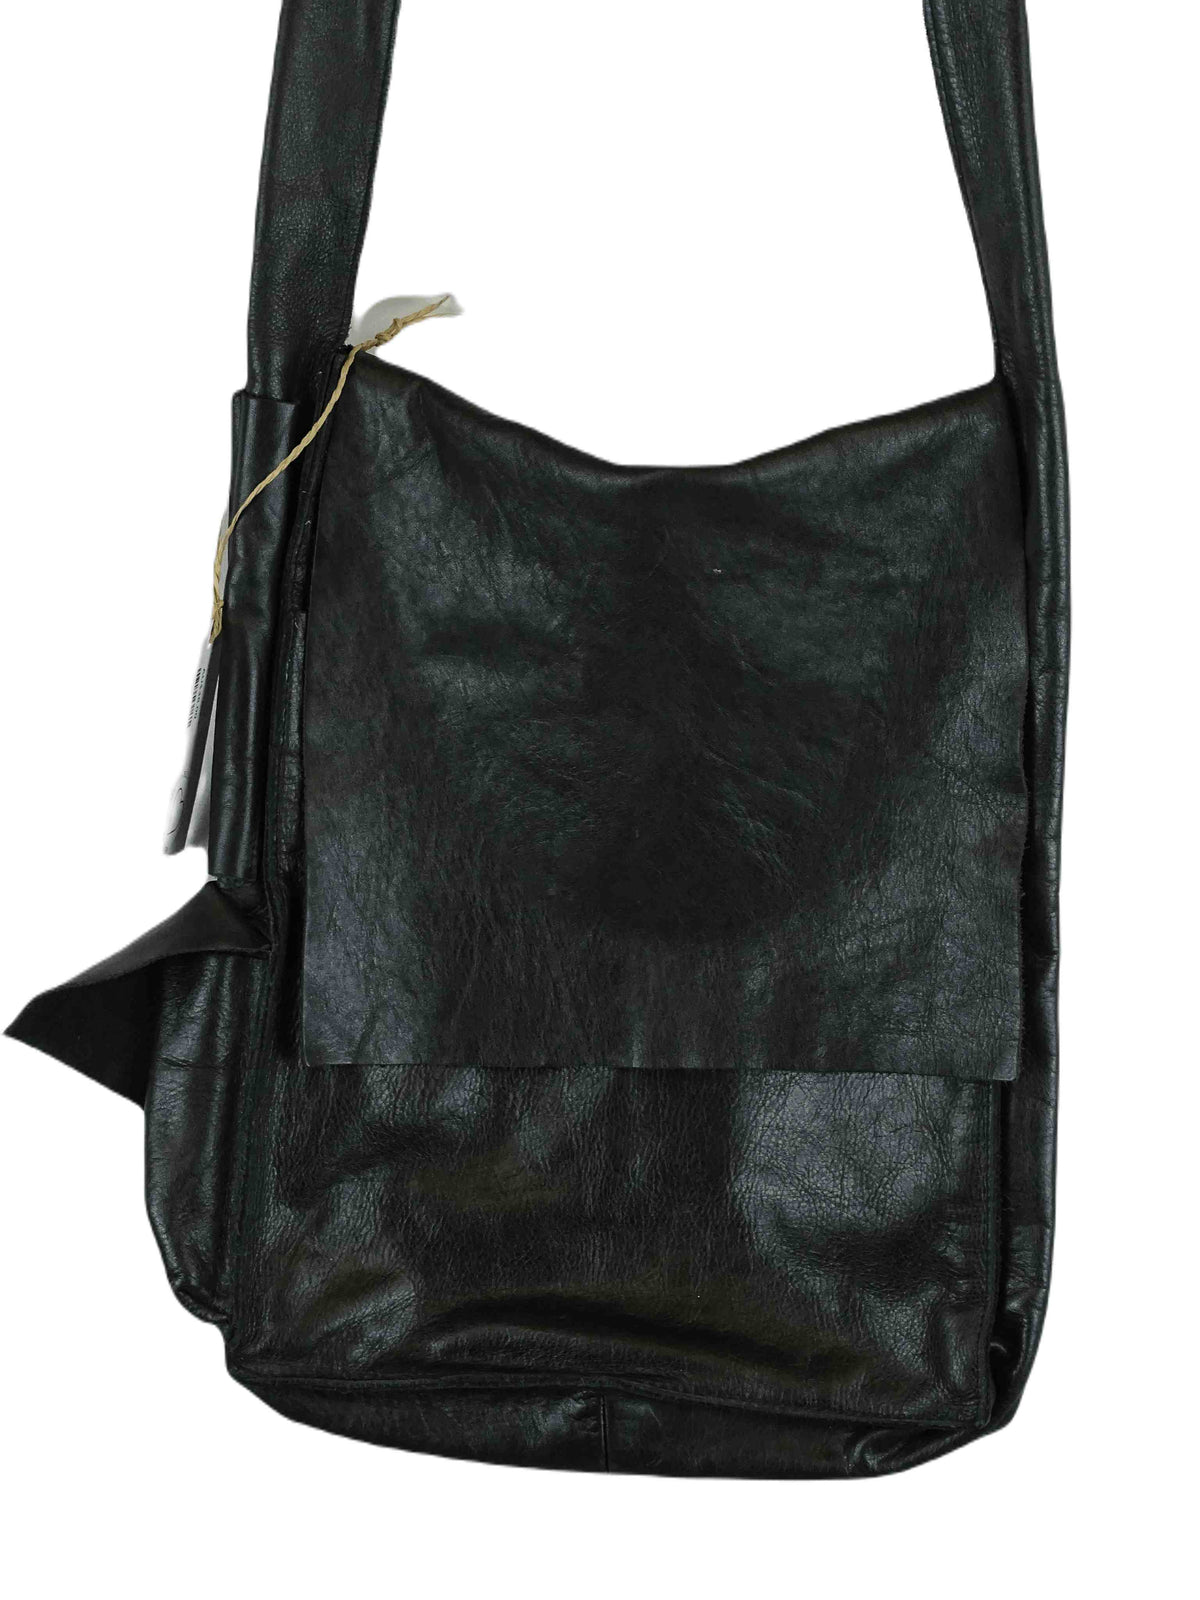 Quarzia Black Leather Bag